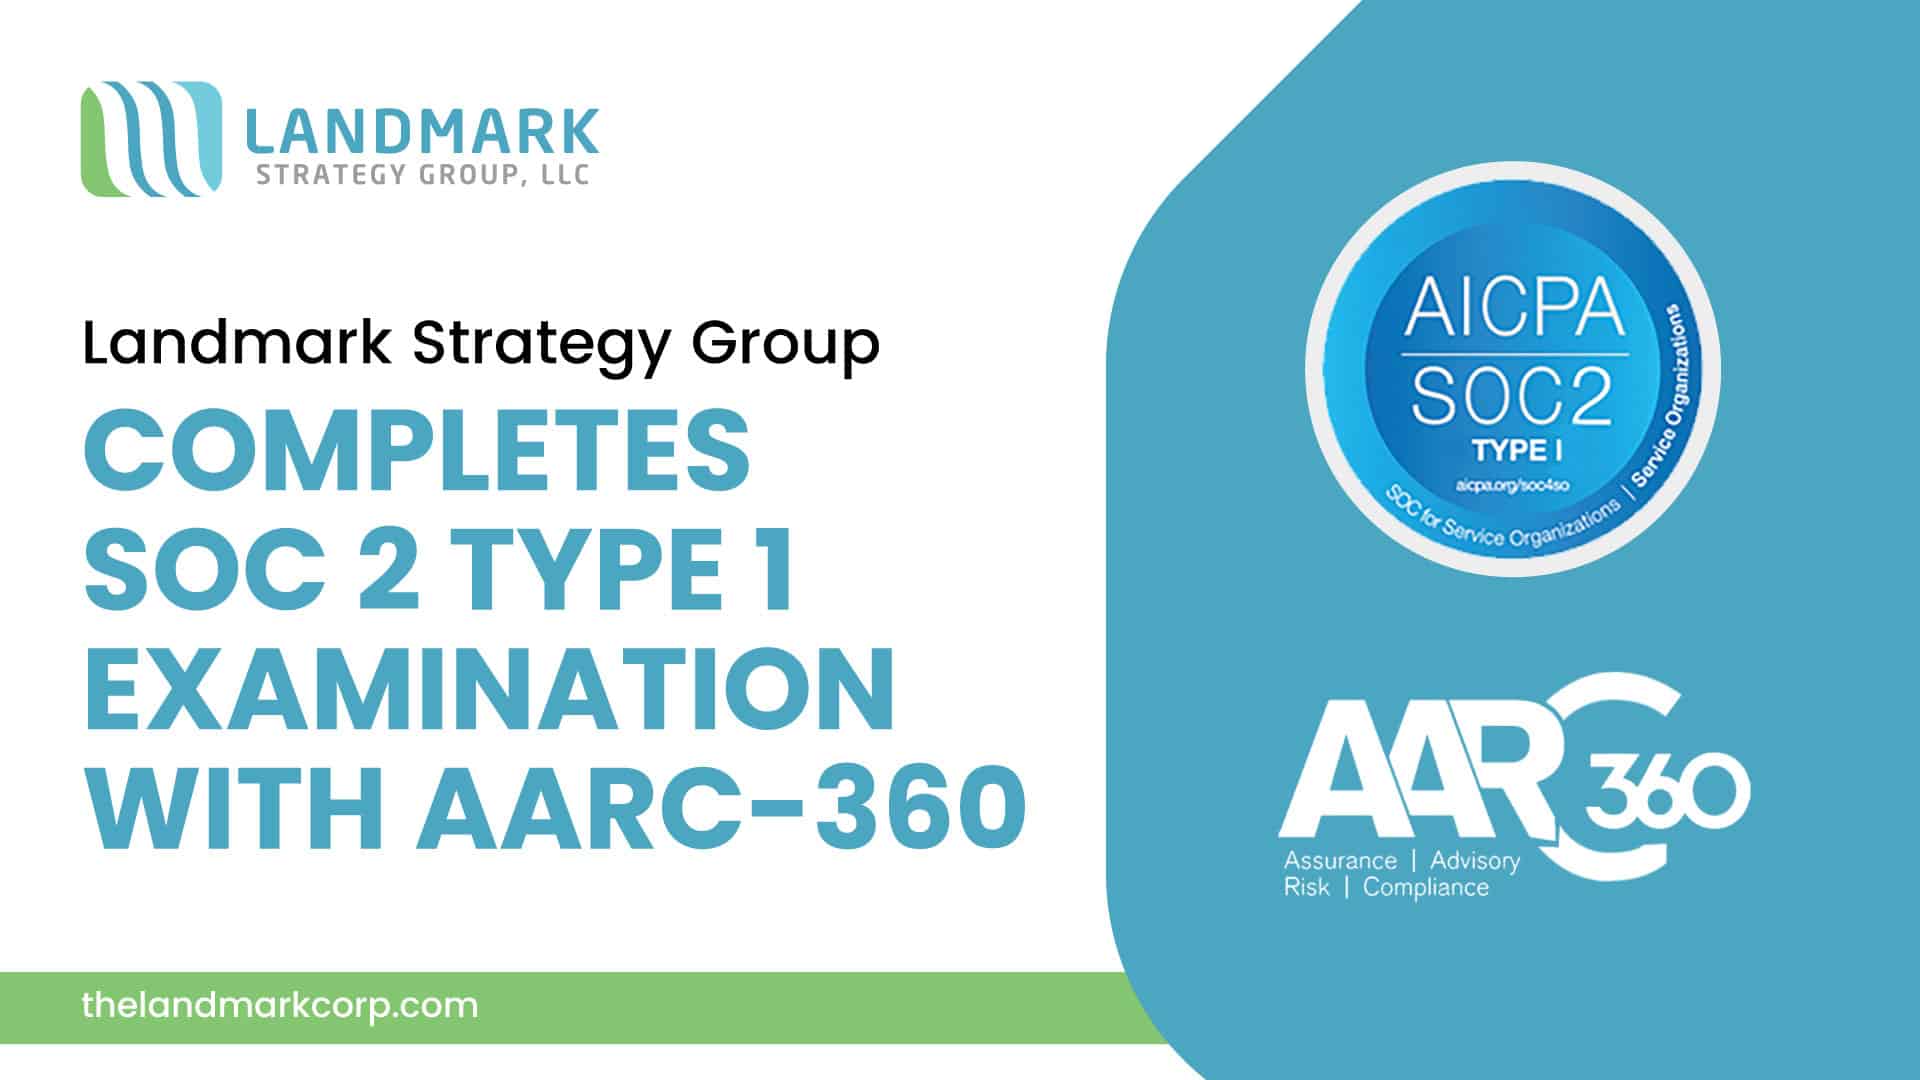 Landmark Strategy Group SOC 2 Type 1 certified